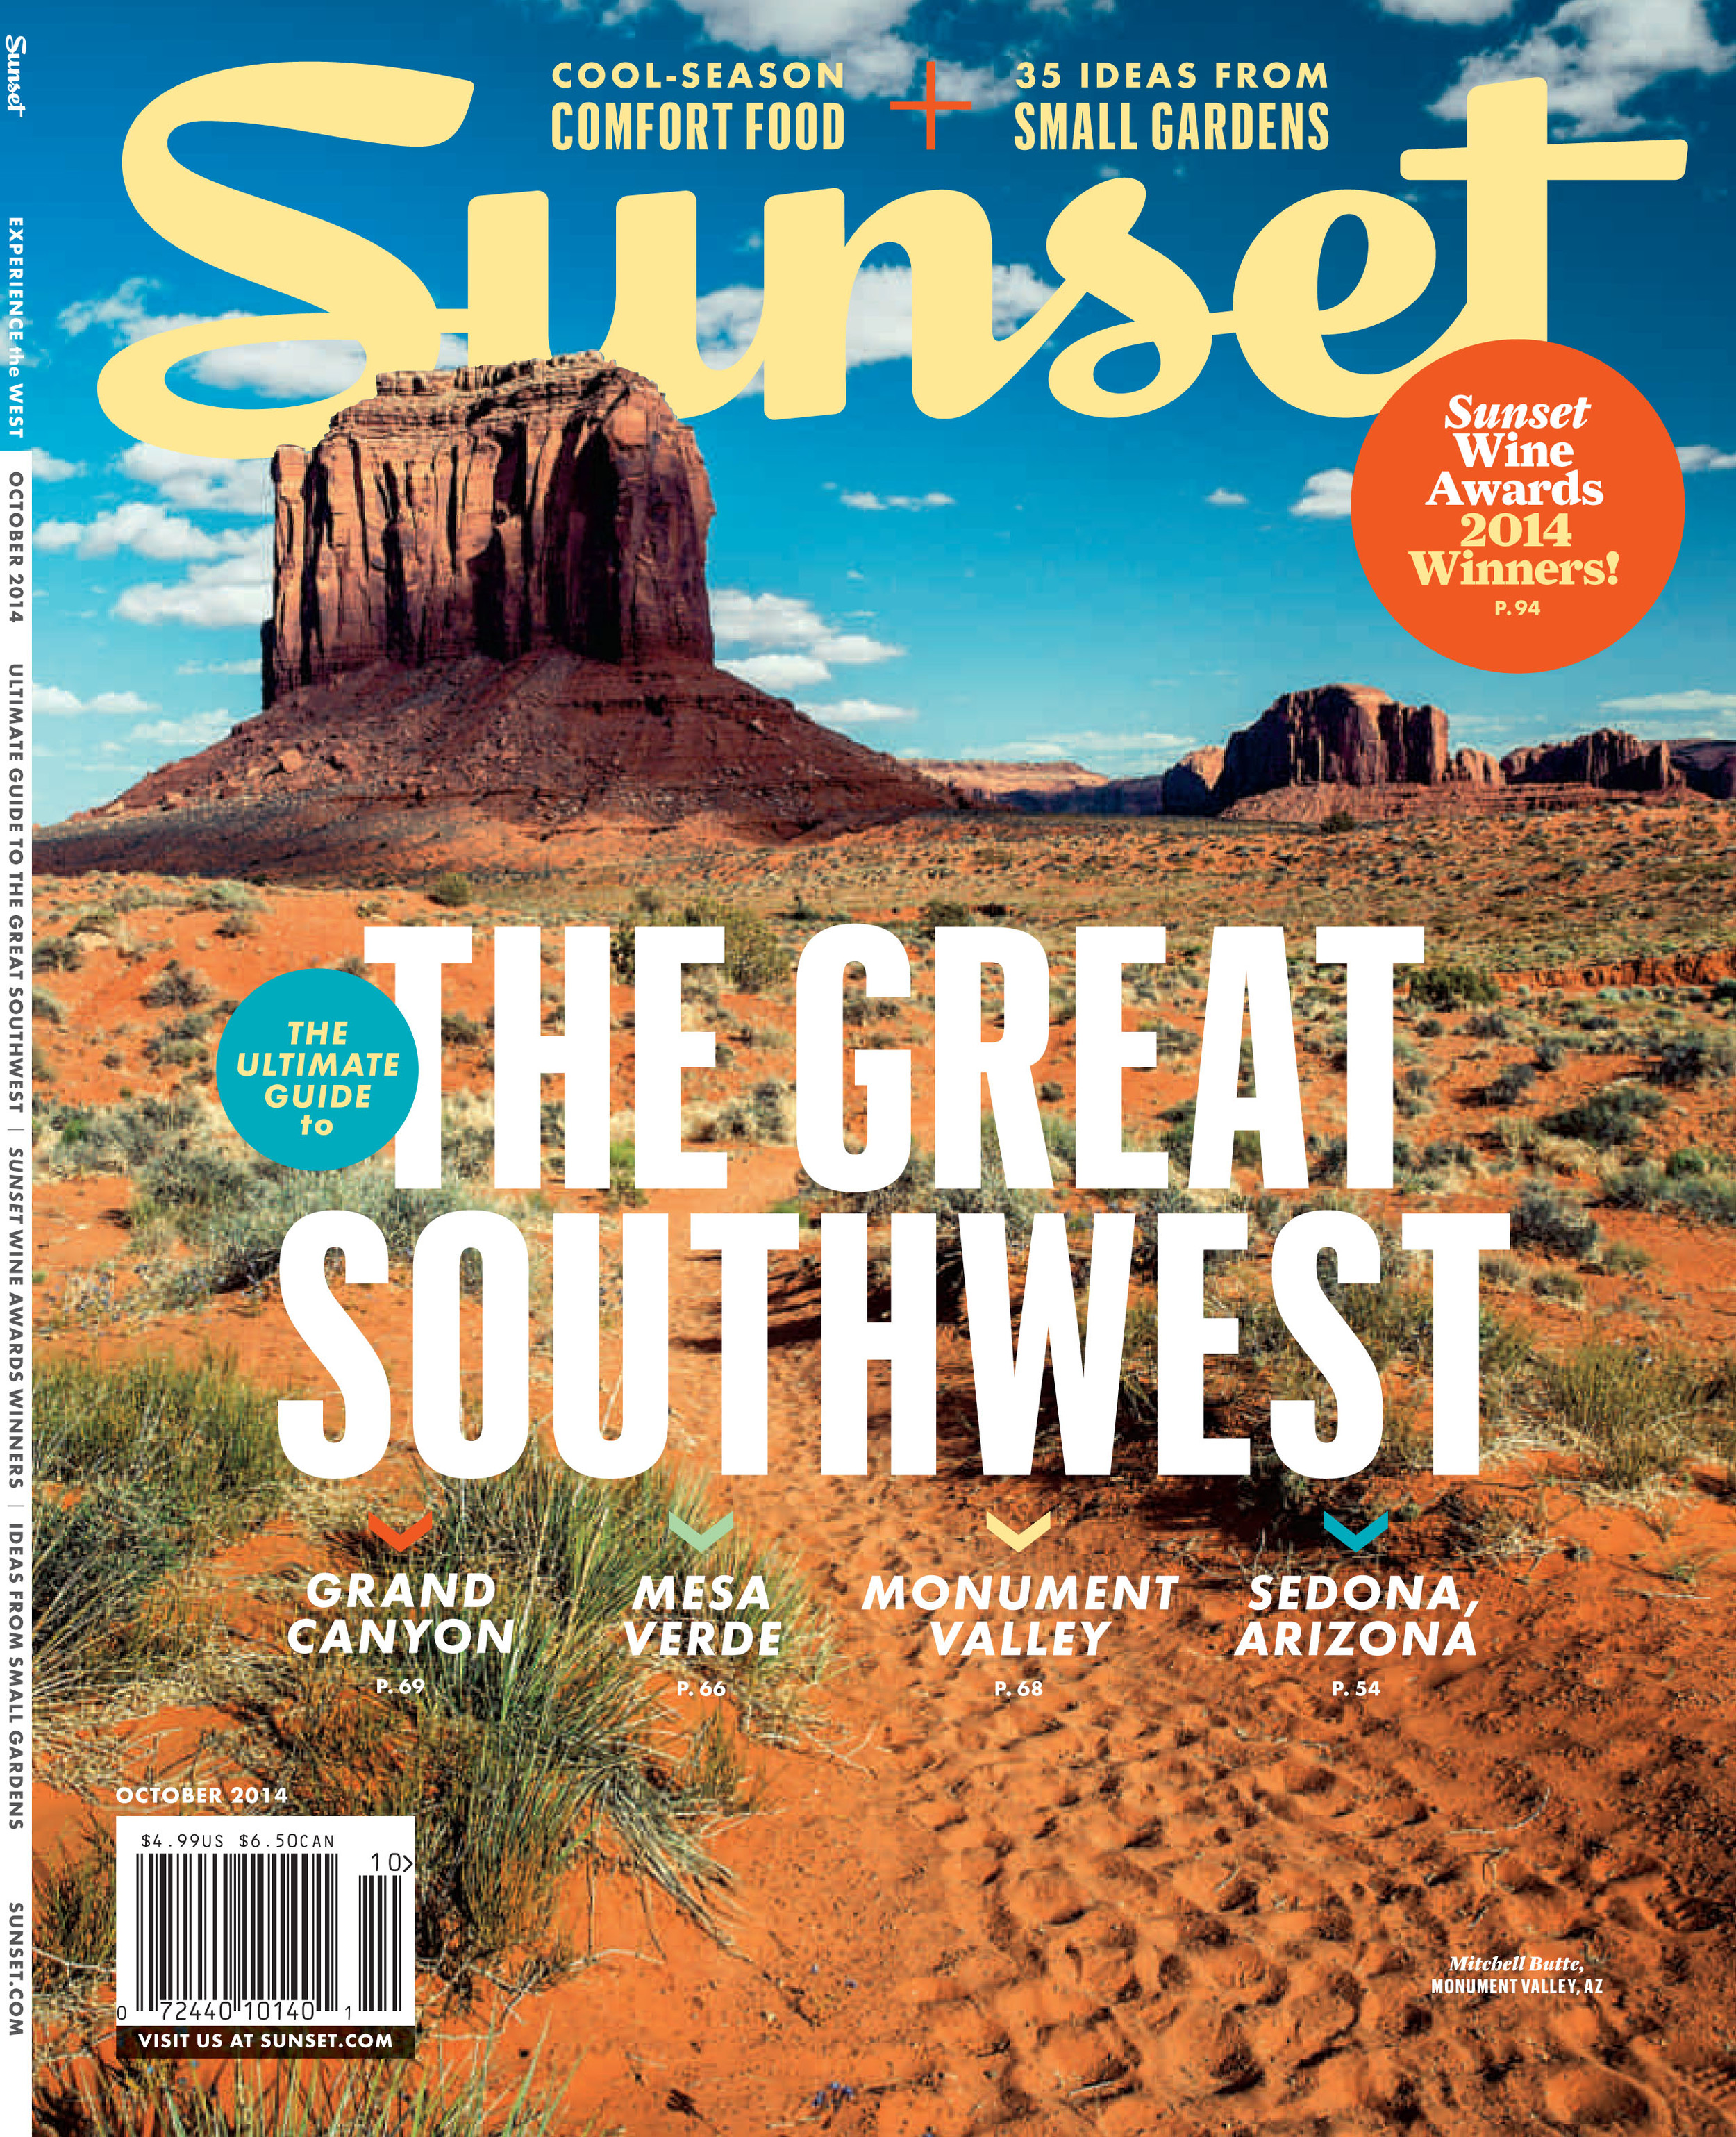 Growsgreen in Sunset Magazine Oct 2014